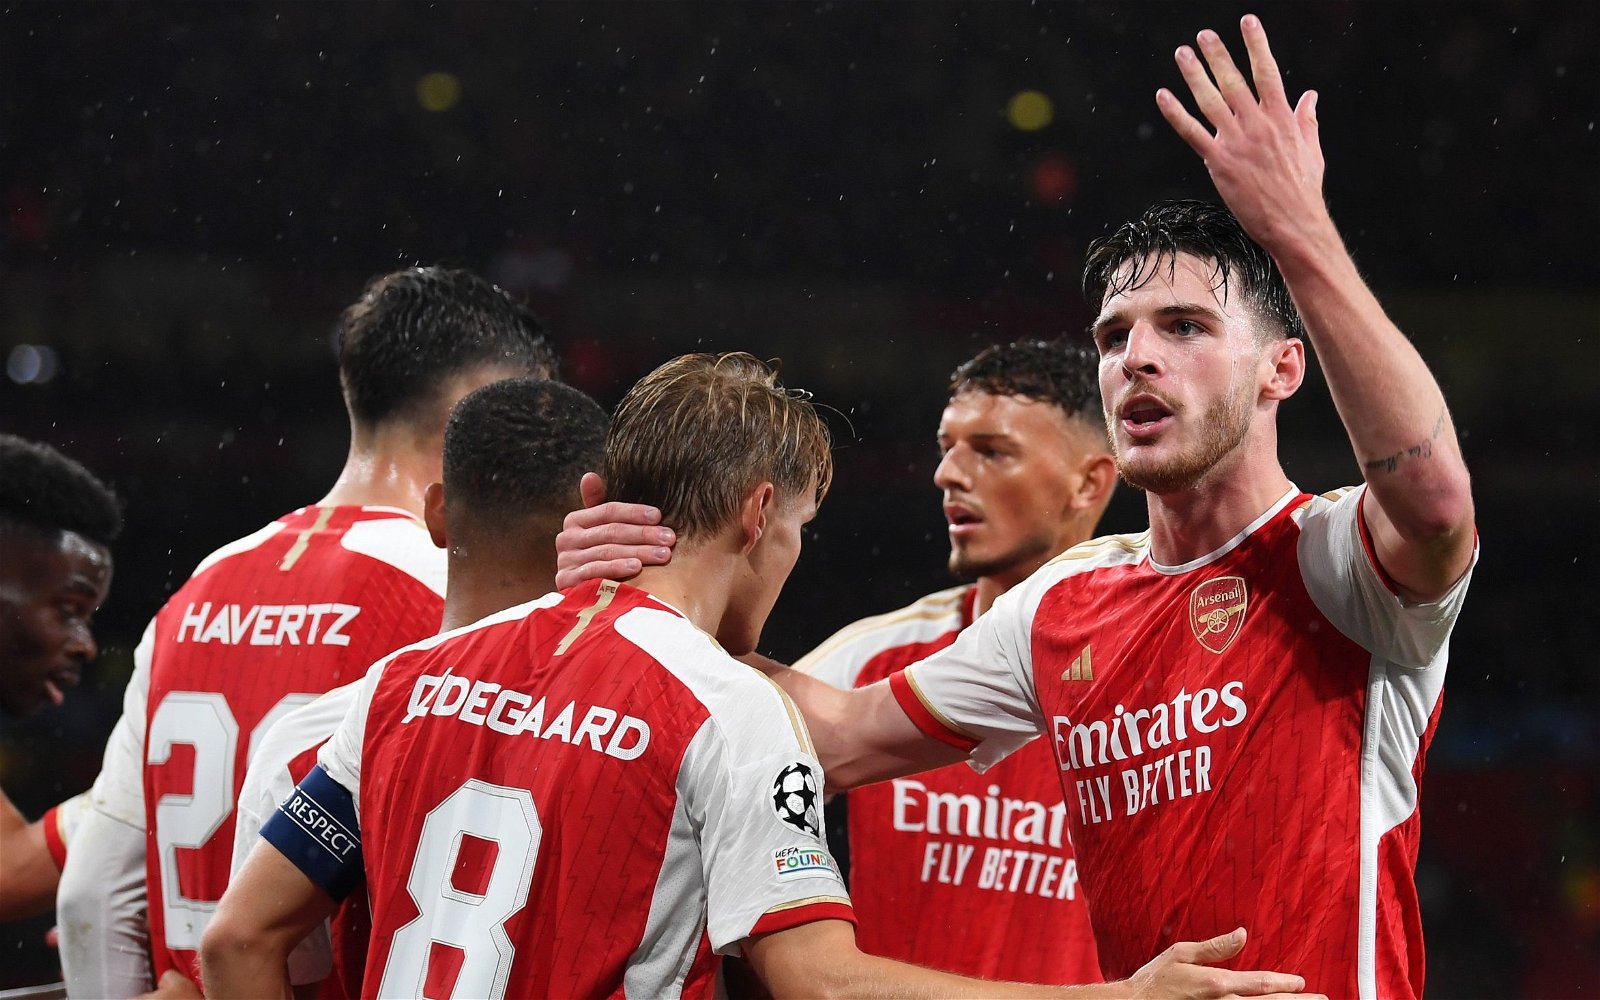 Preview: Arsenal v RC Lens, Match preview, News